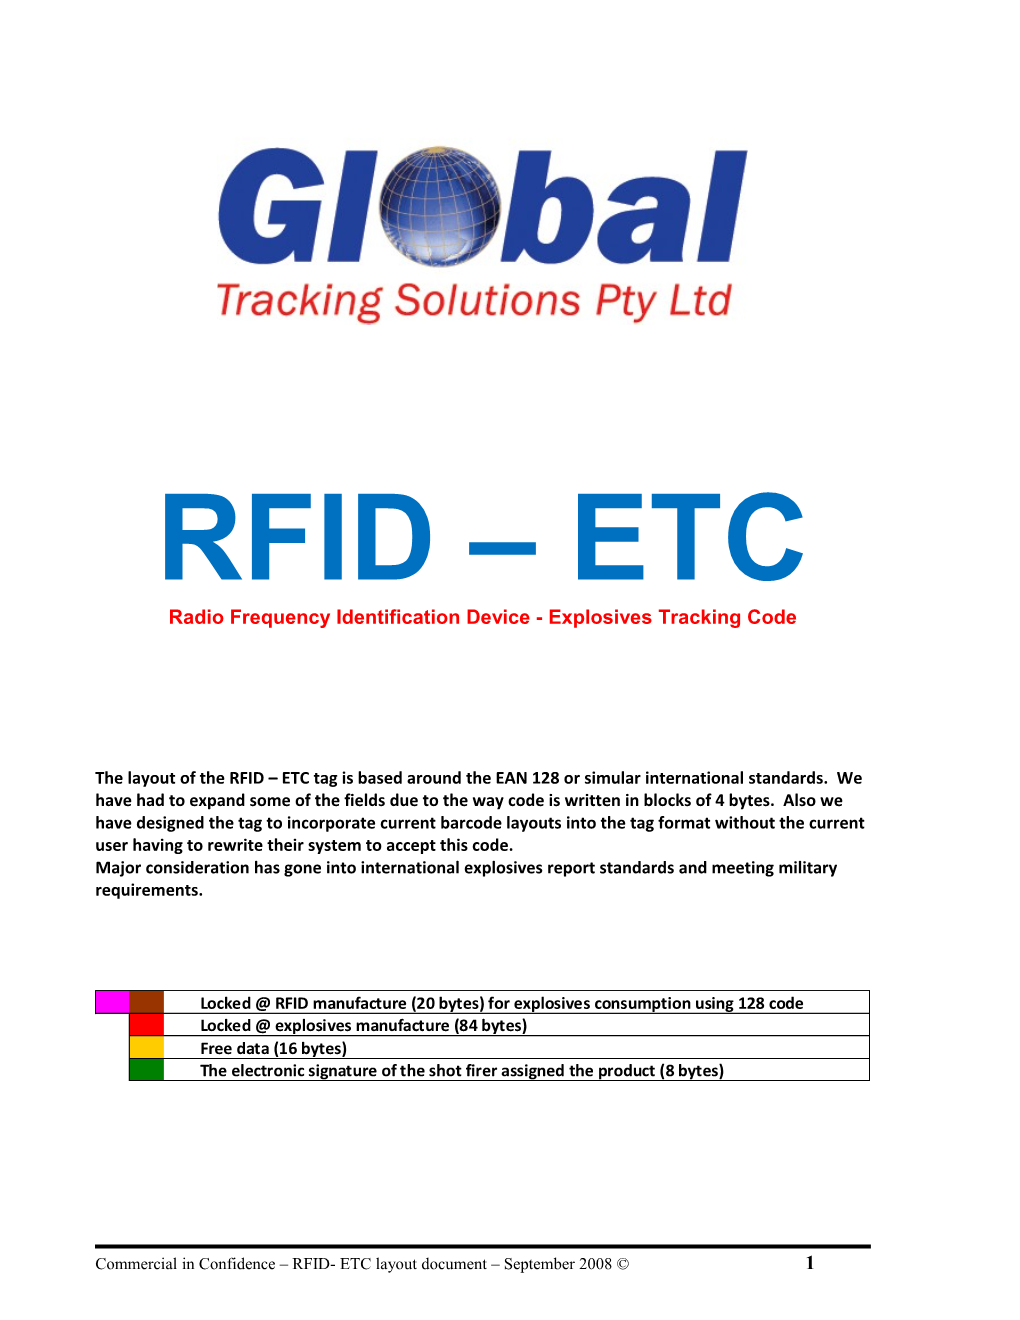 RFID - ETC Tag Layout